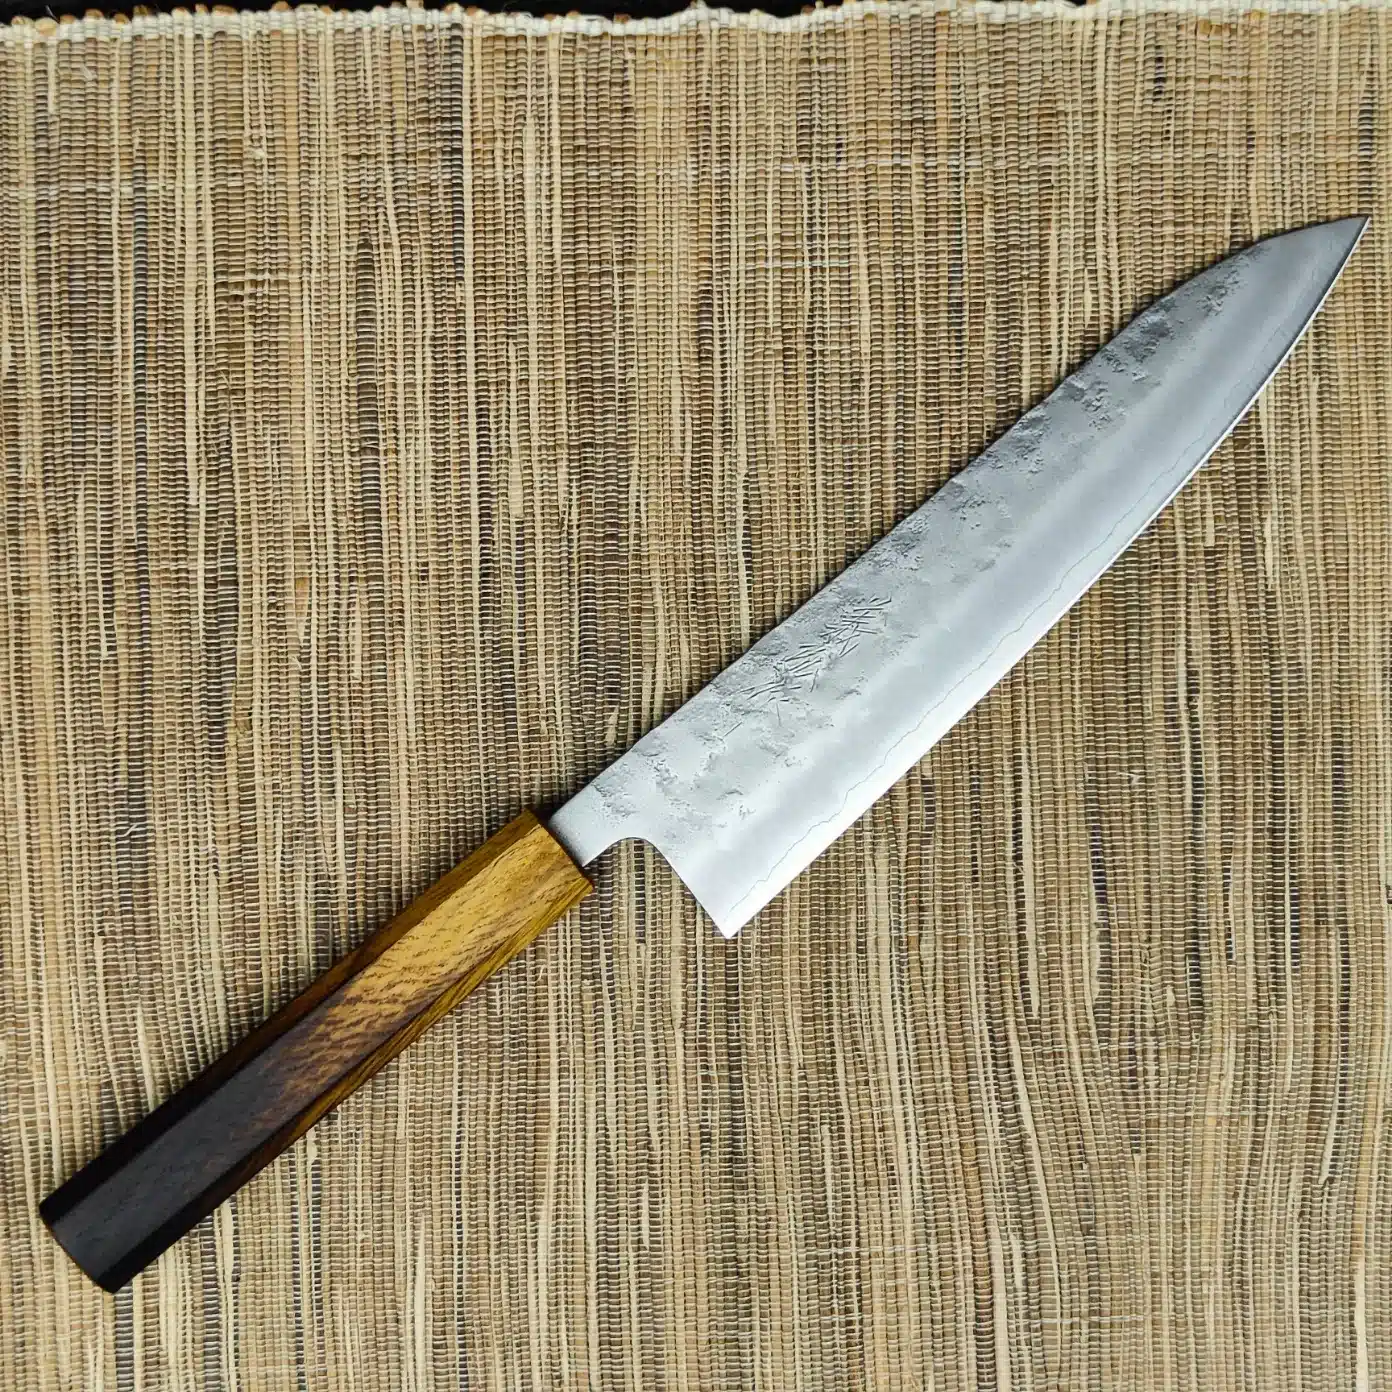 Haiku Nashiji Urushi Chef’s Knife 210mm